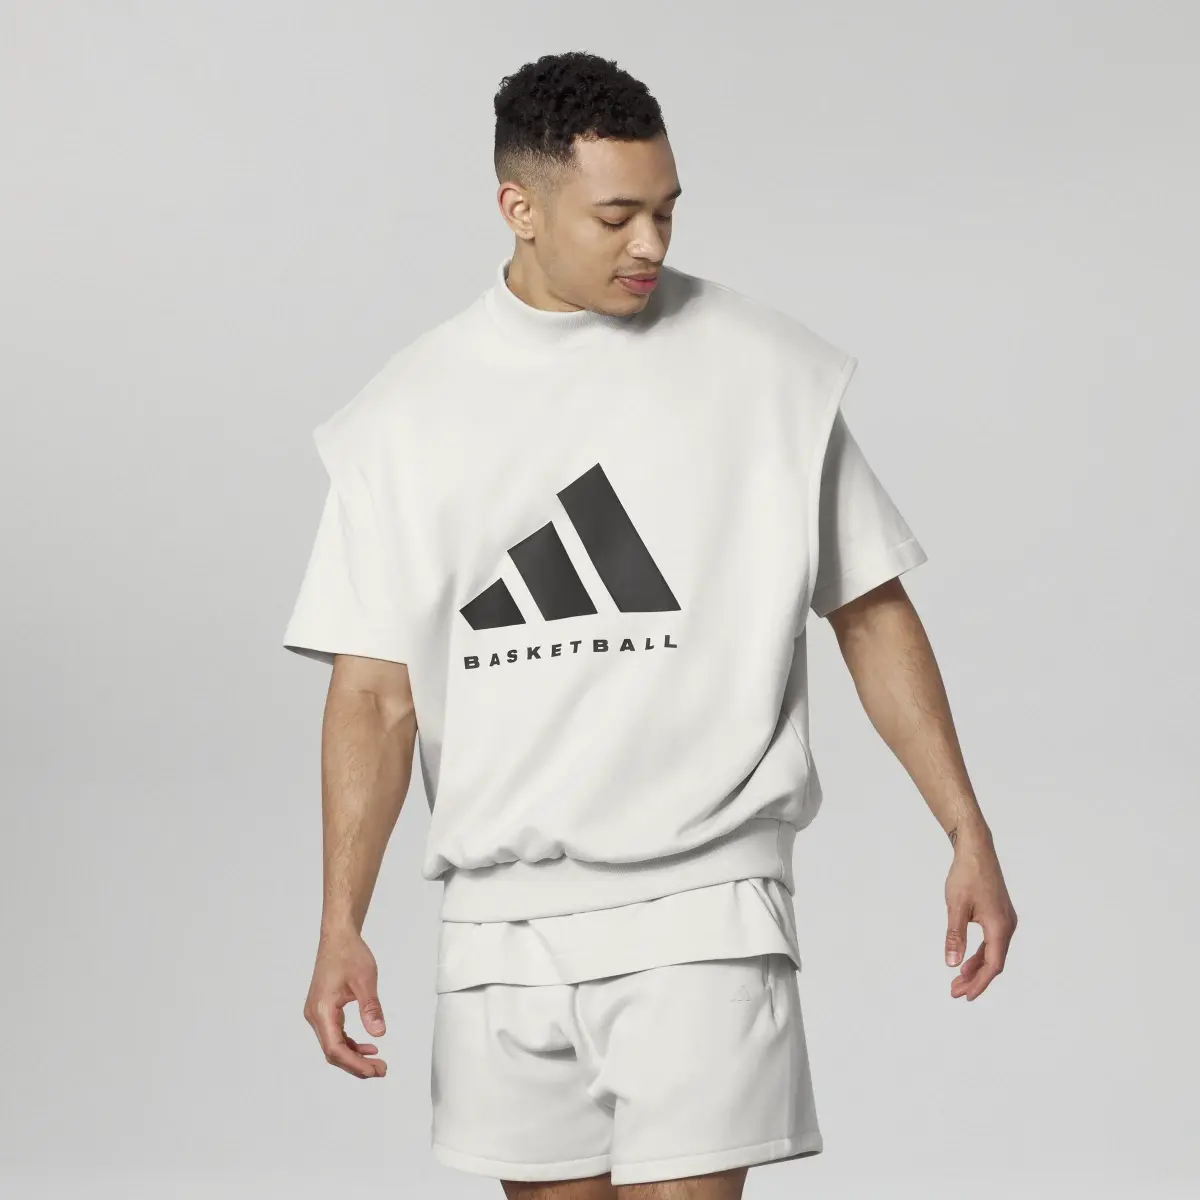 Adidas Basketball Sleeveless Sweatshirt. 3